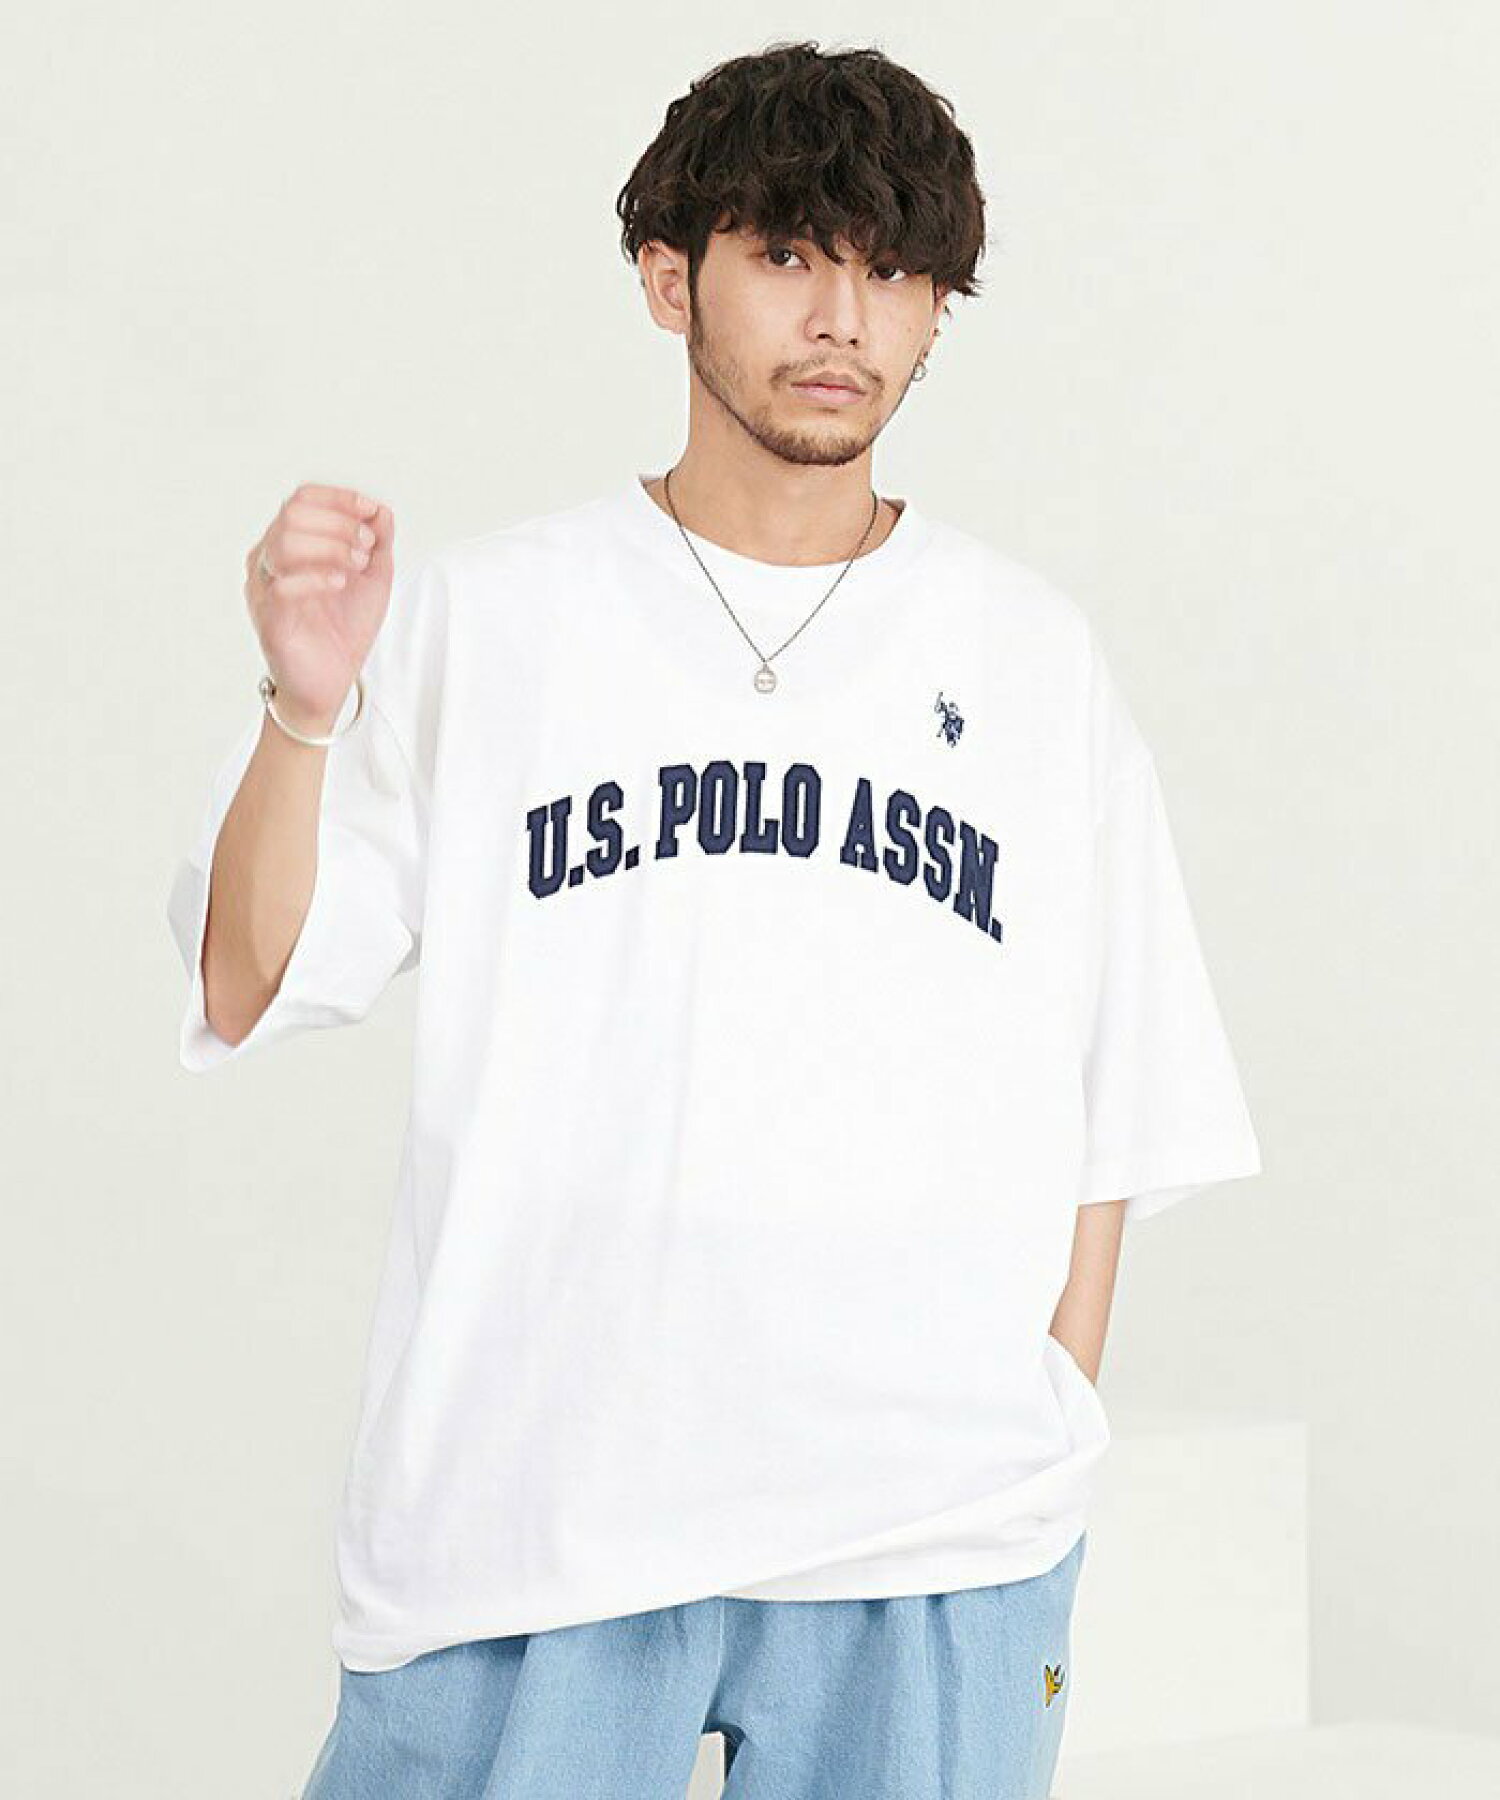 U.S. POLO ASSN. アーチロゴクルーネック半袖Tシャツ ブランド